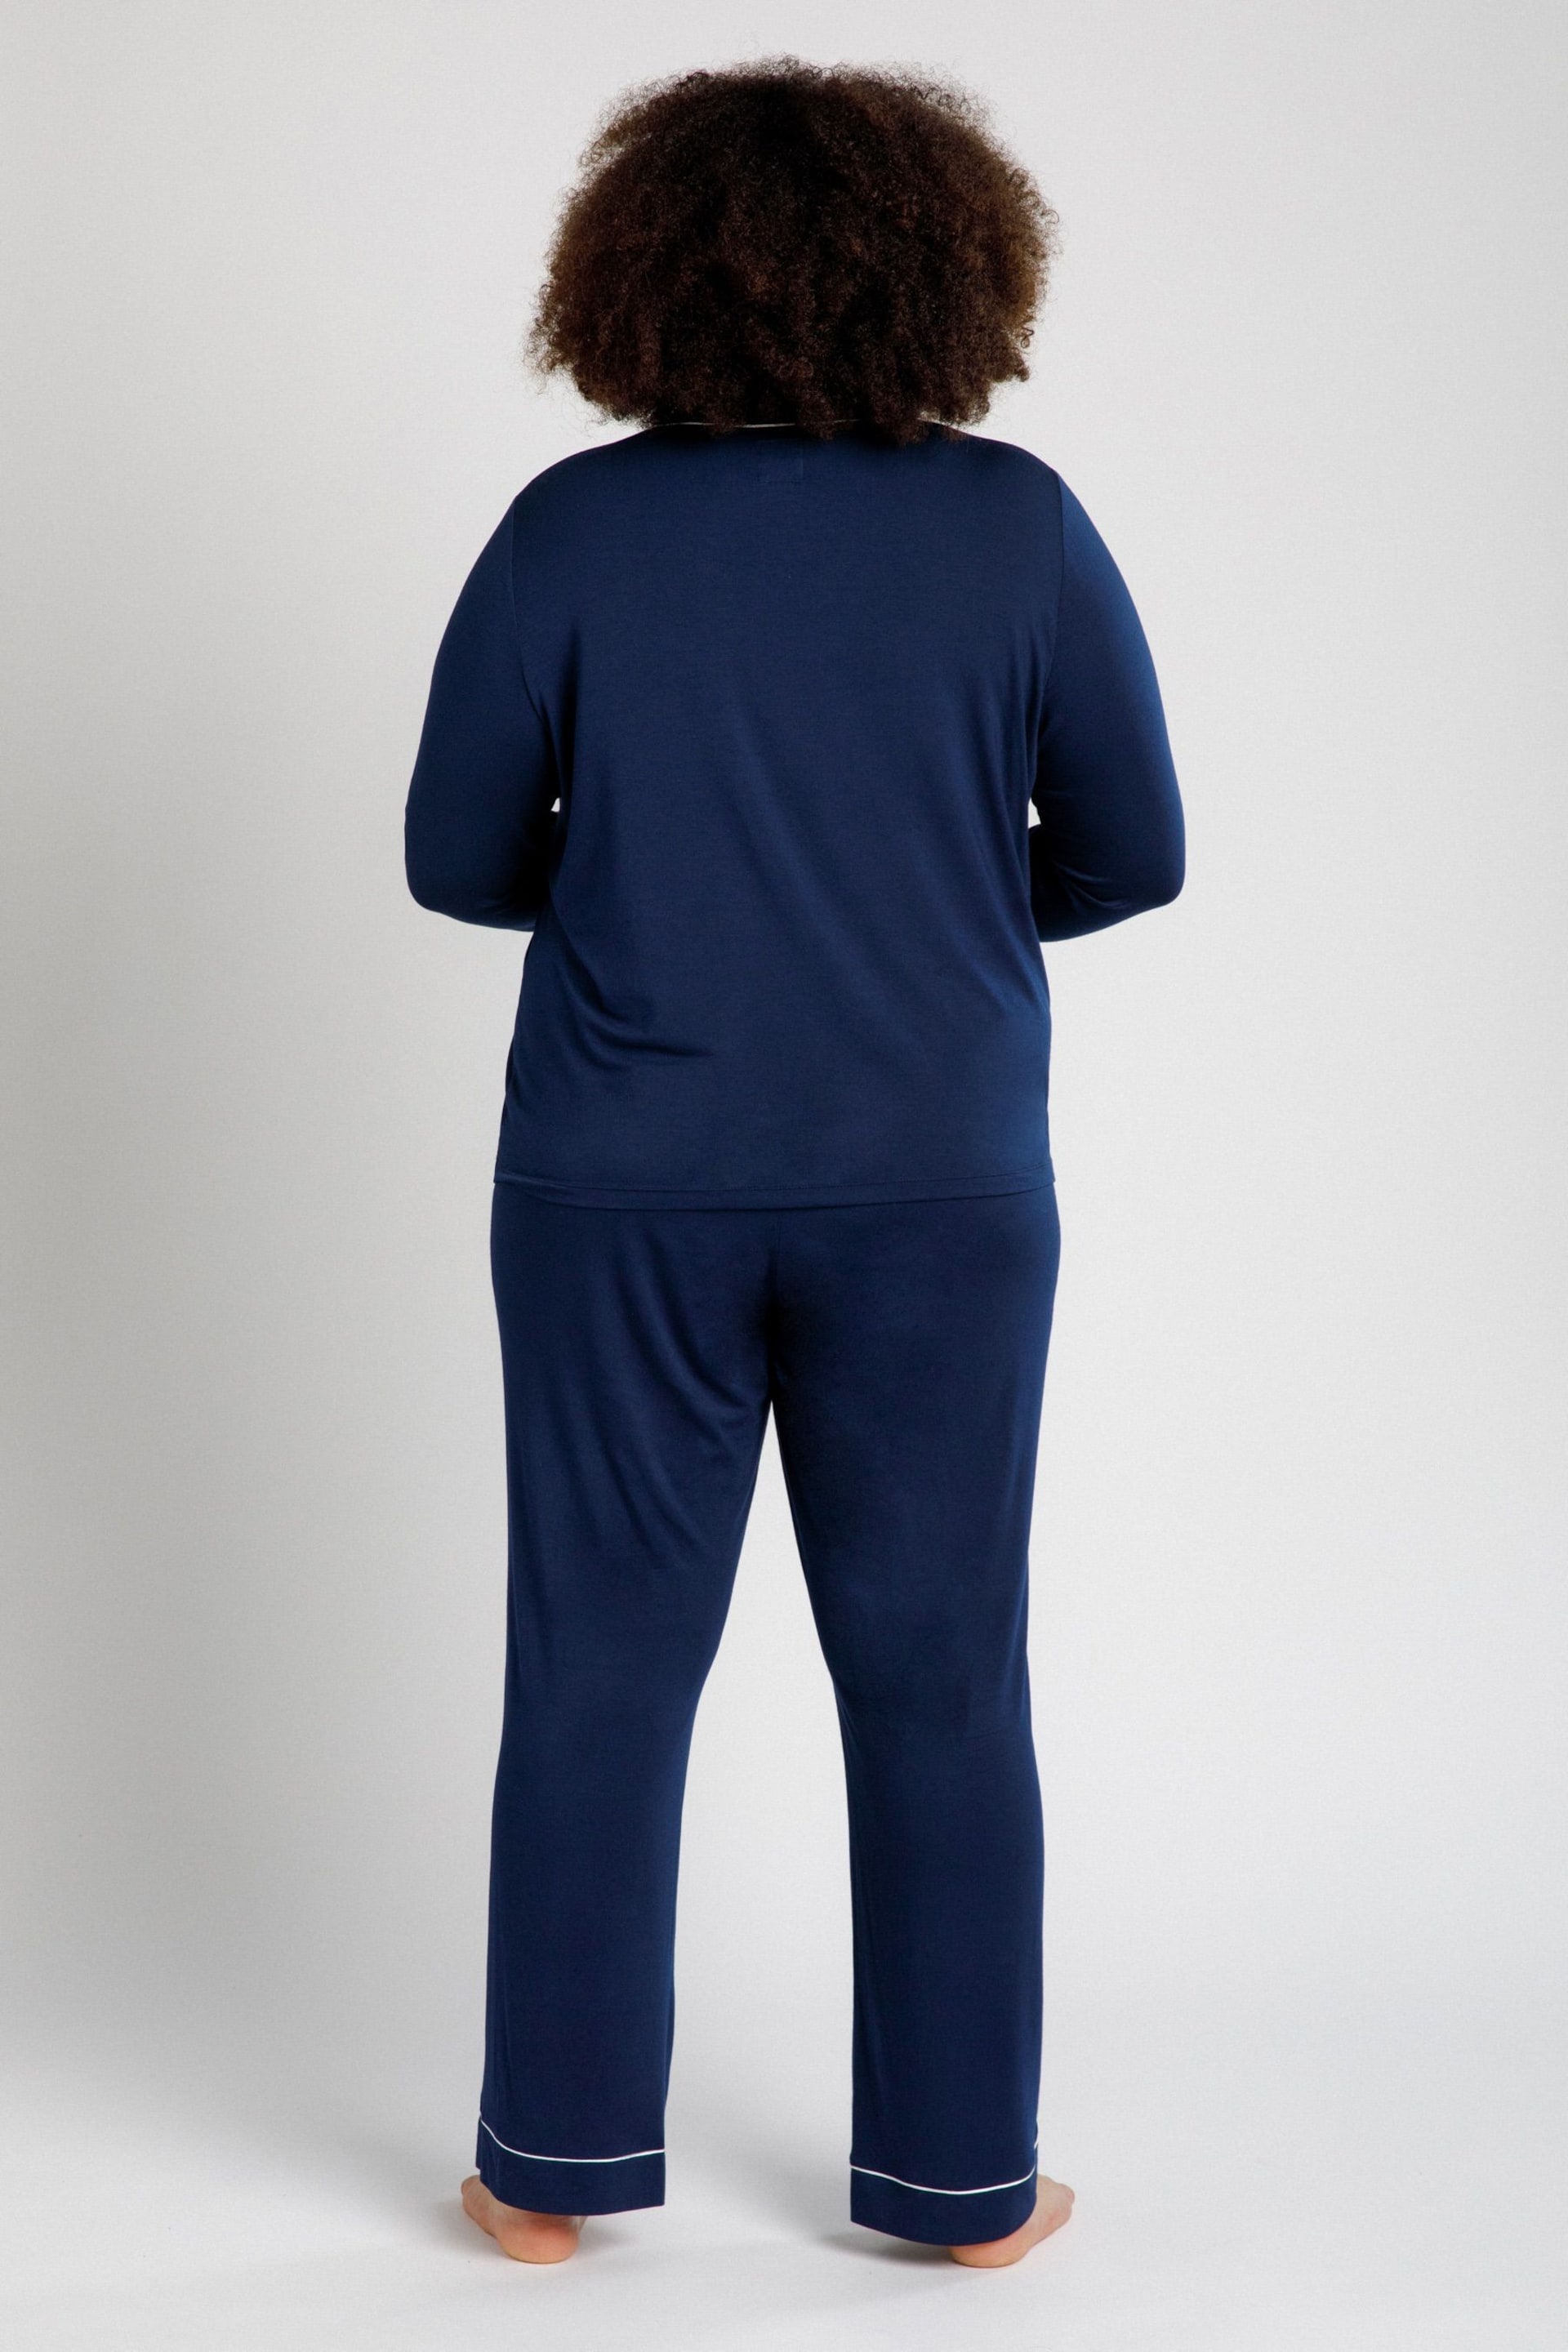 Chelsea Peers Blue Curve Modal Button Up Pyjama Set - Image 5 of 5